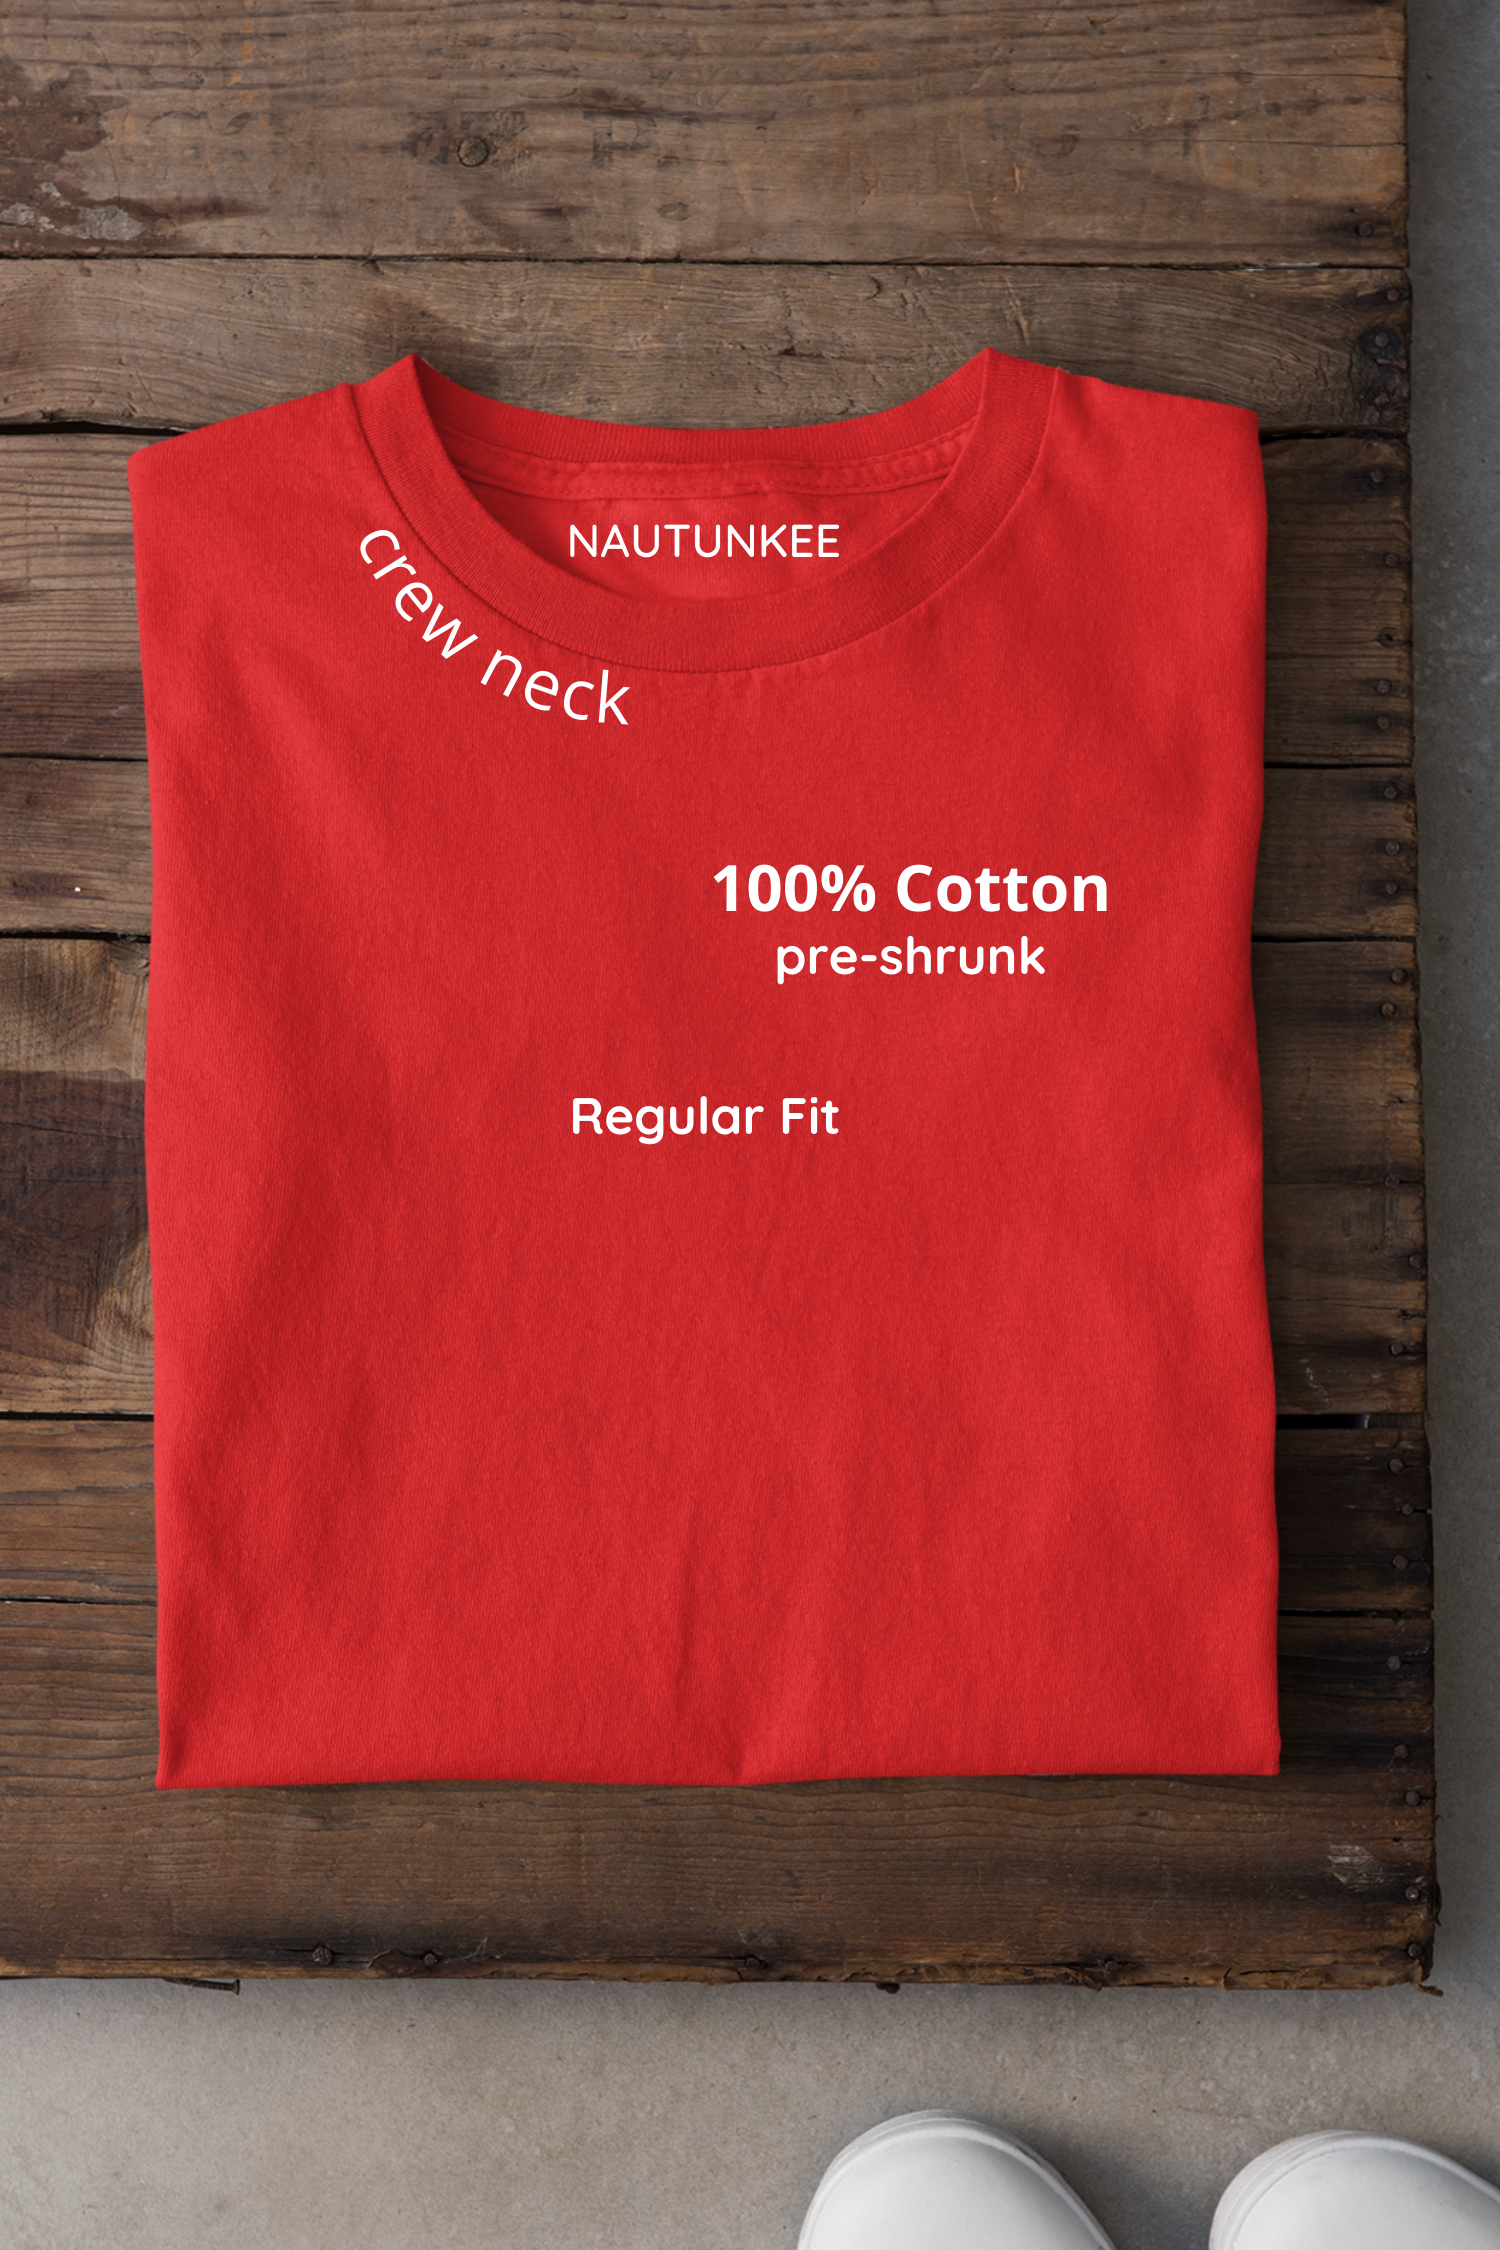 plain red crew neck t-shirt for women - nautunkee.com